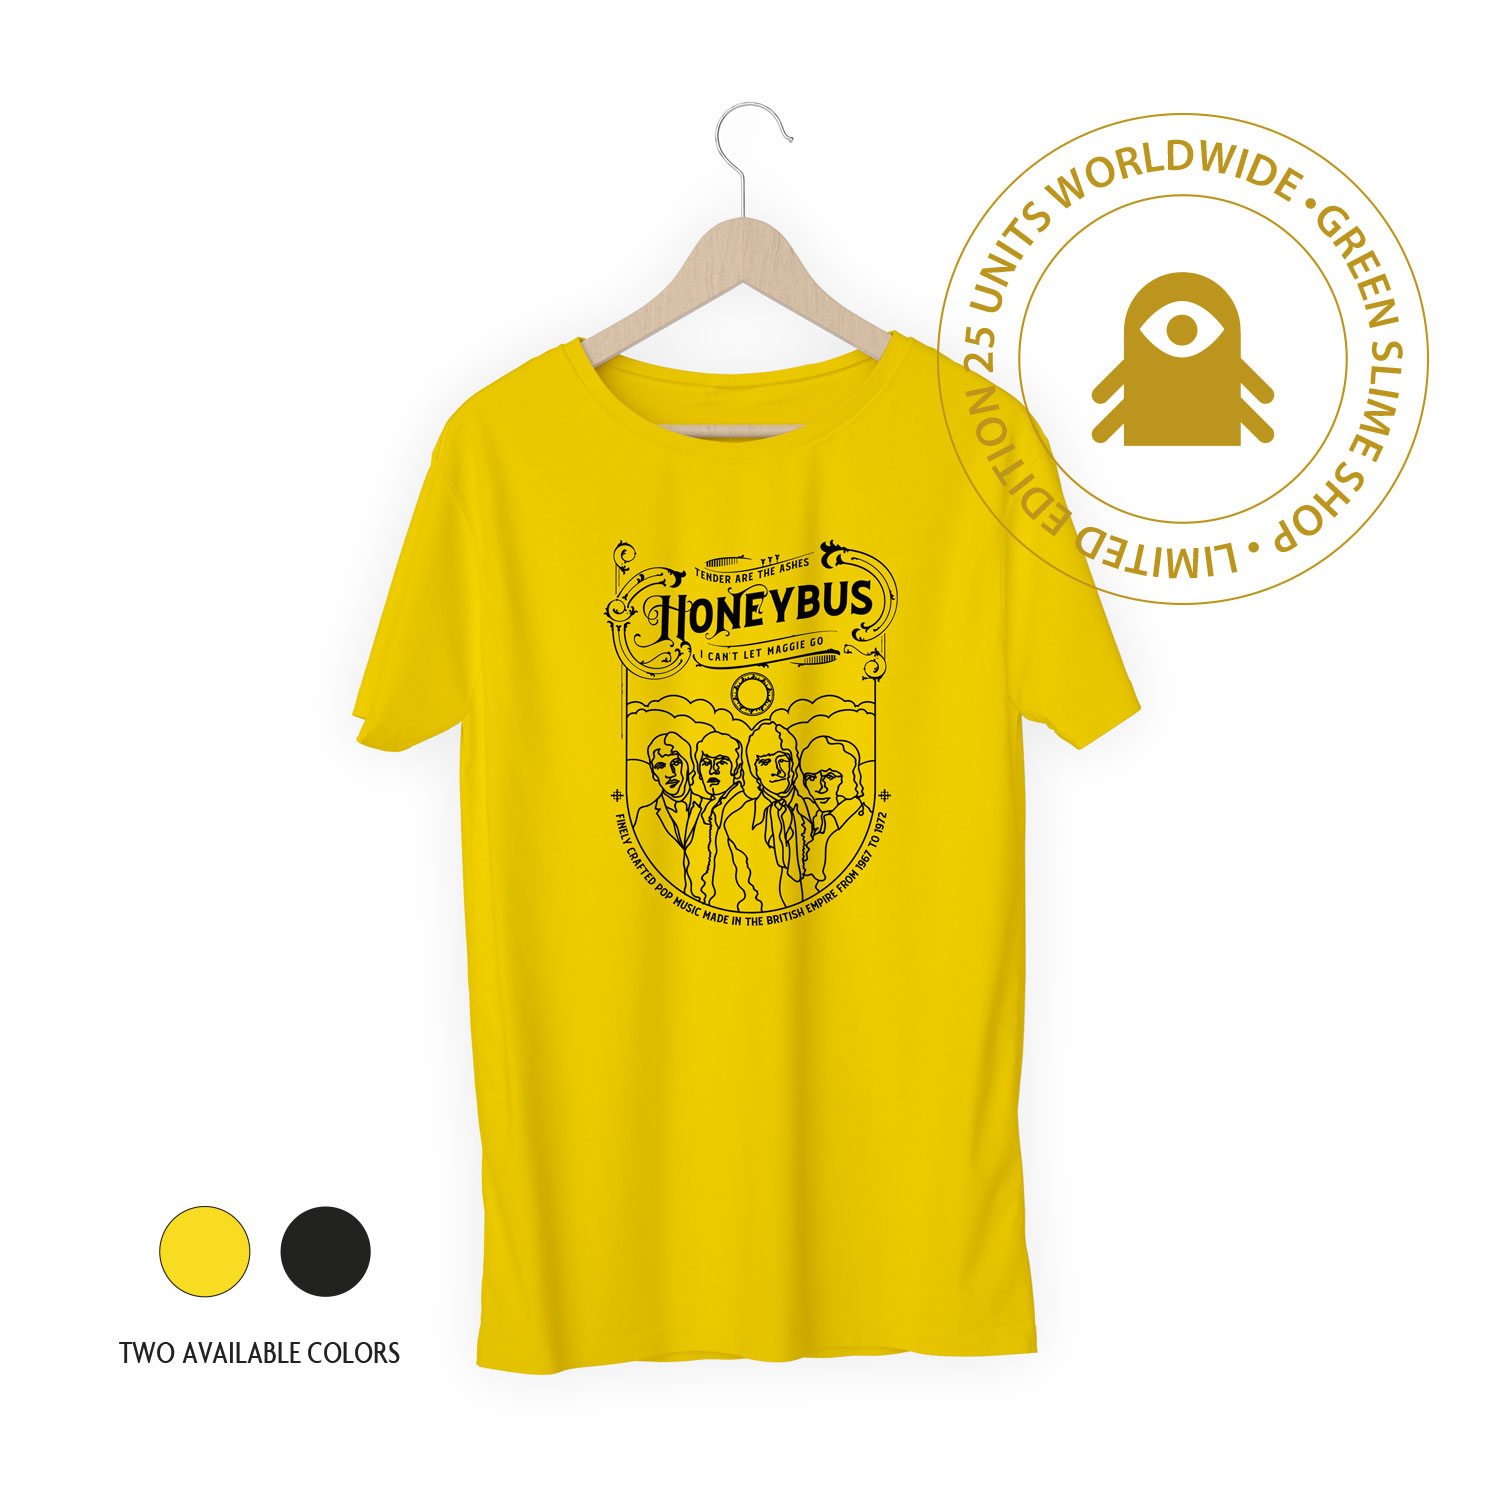 Honeybus Black/Yellow T-Shirt for men and women